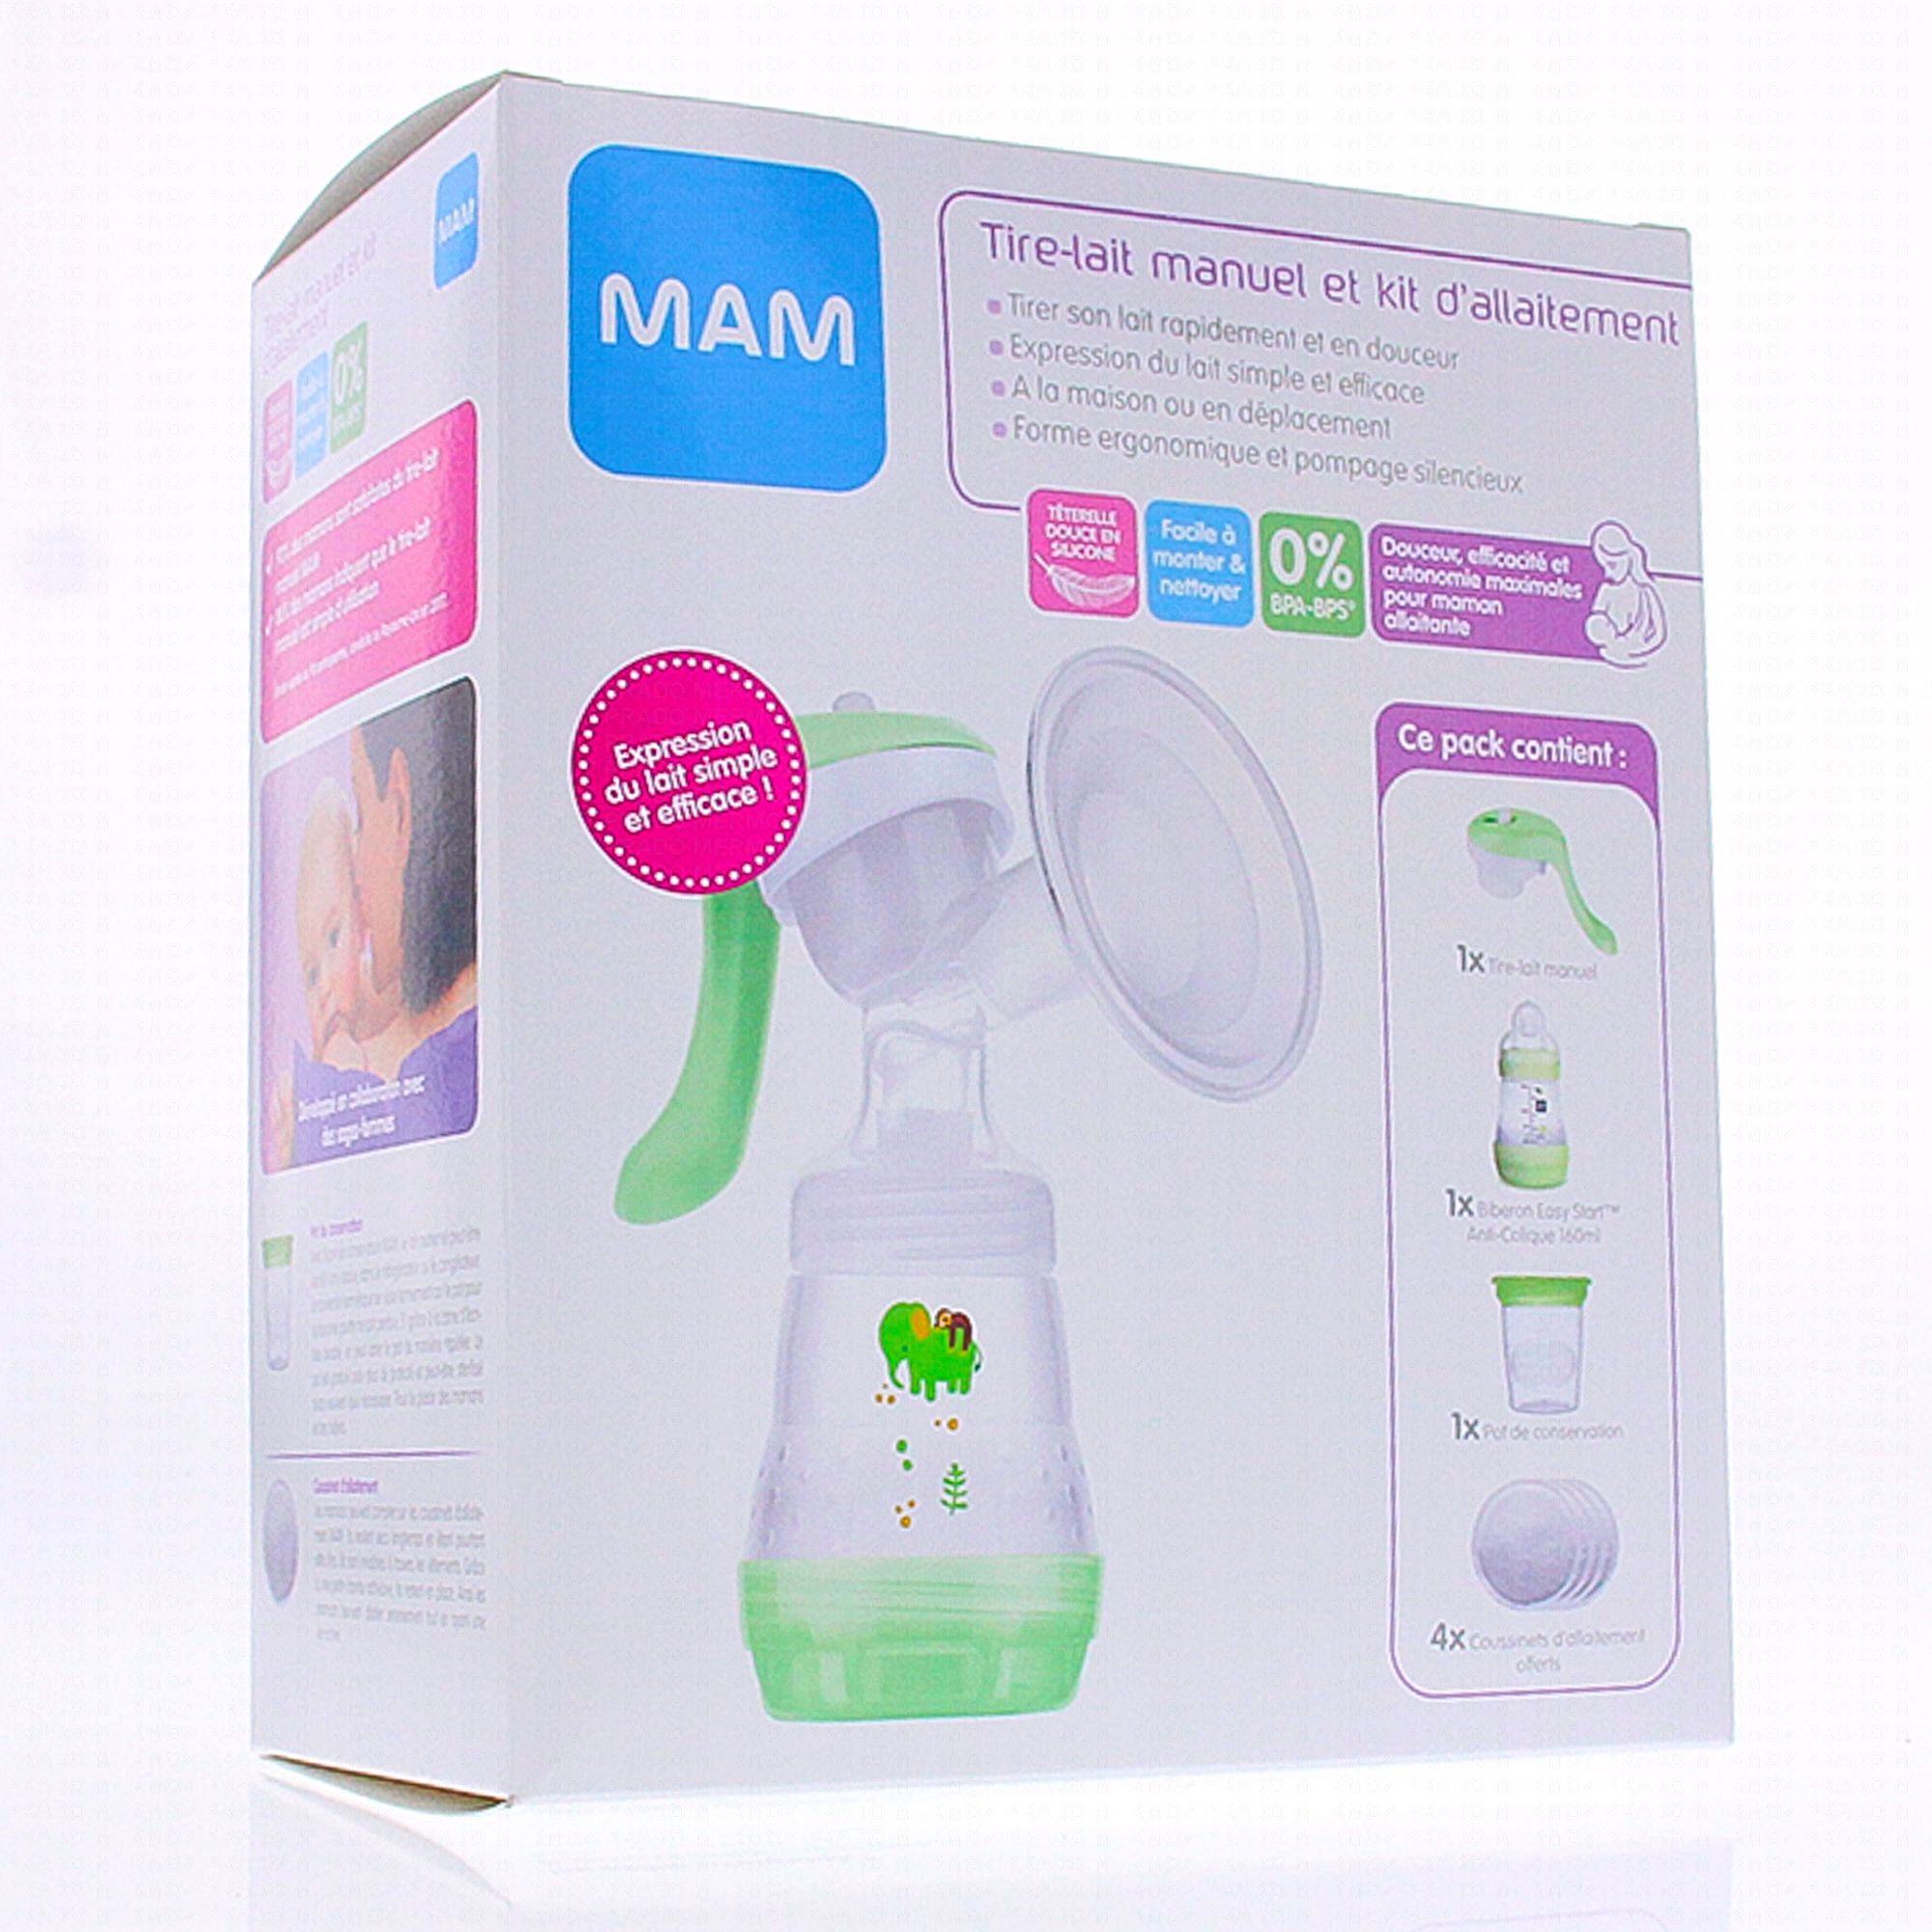 MAM Tire-lait manuel + kit allaitement - Parapharmacie Prado Mermoz